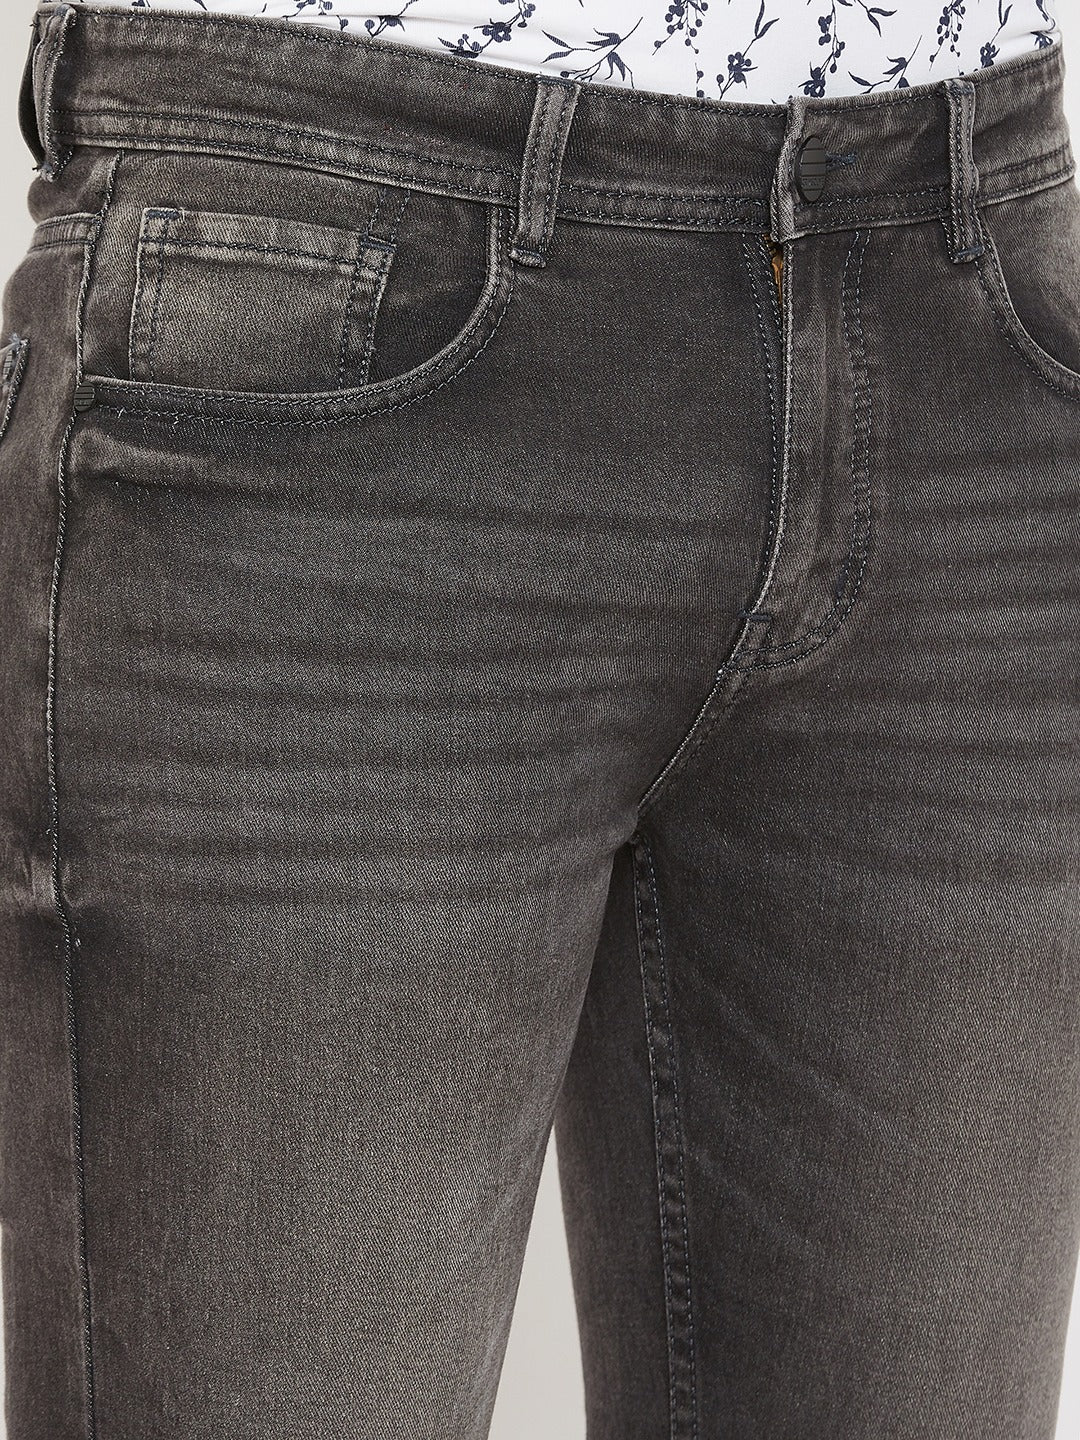 Grey Slim Fit Jeans - Men Jeans